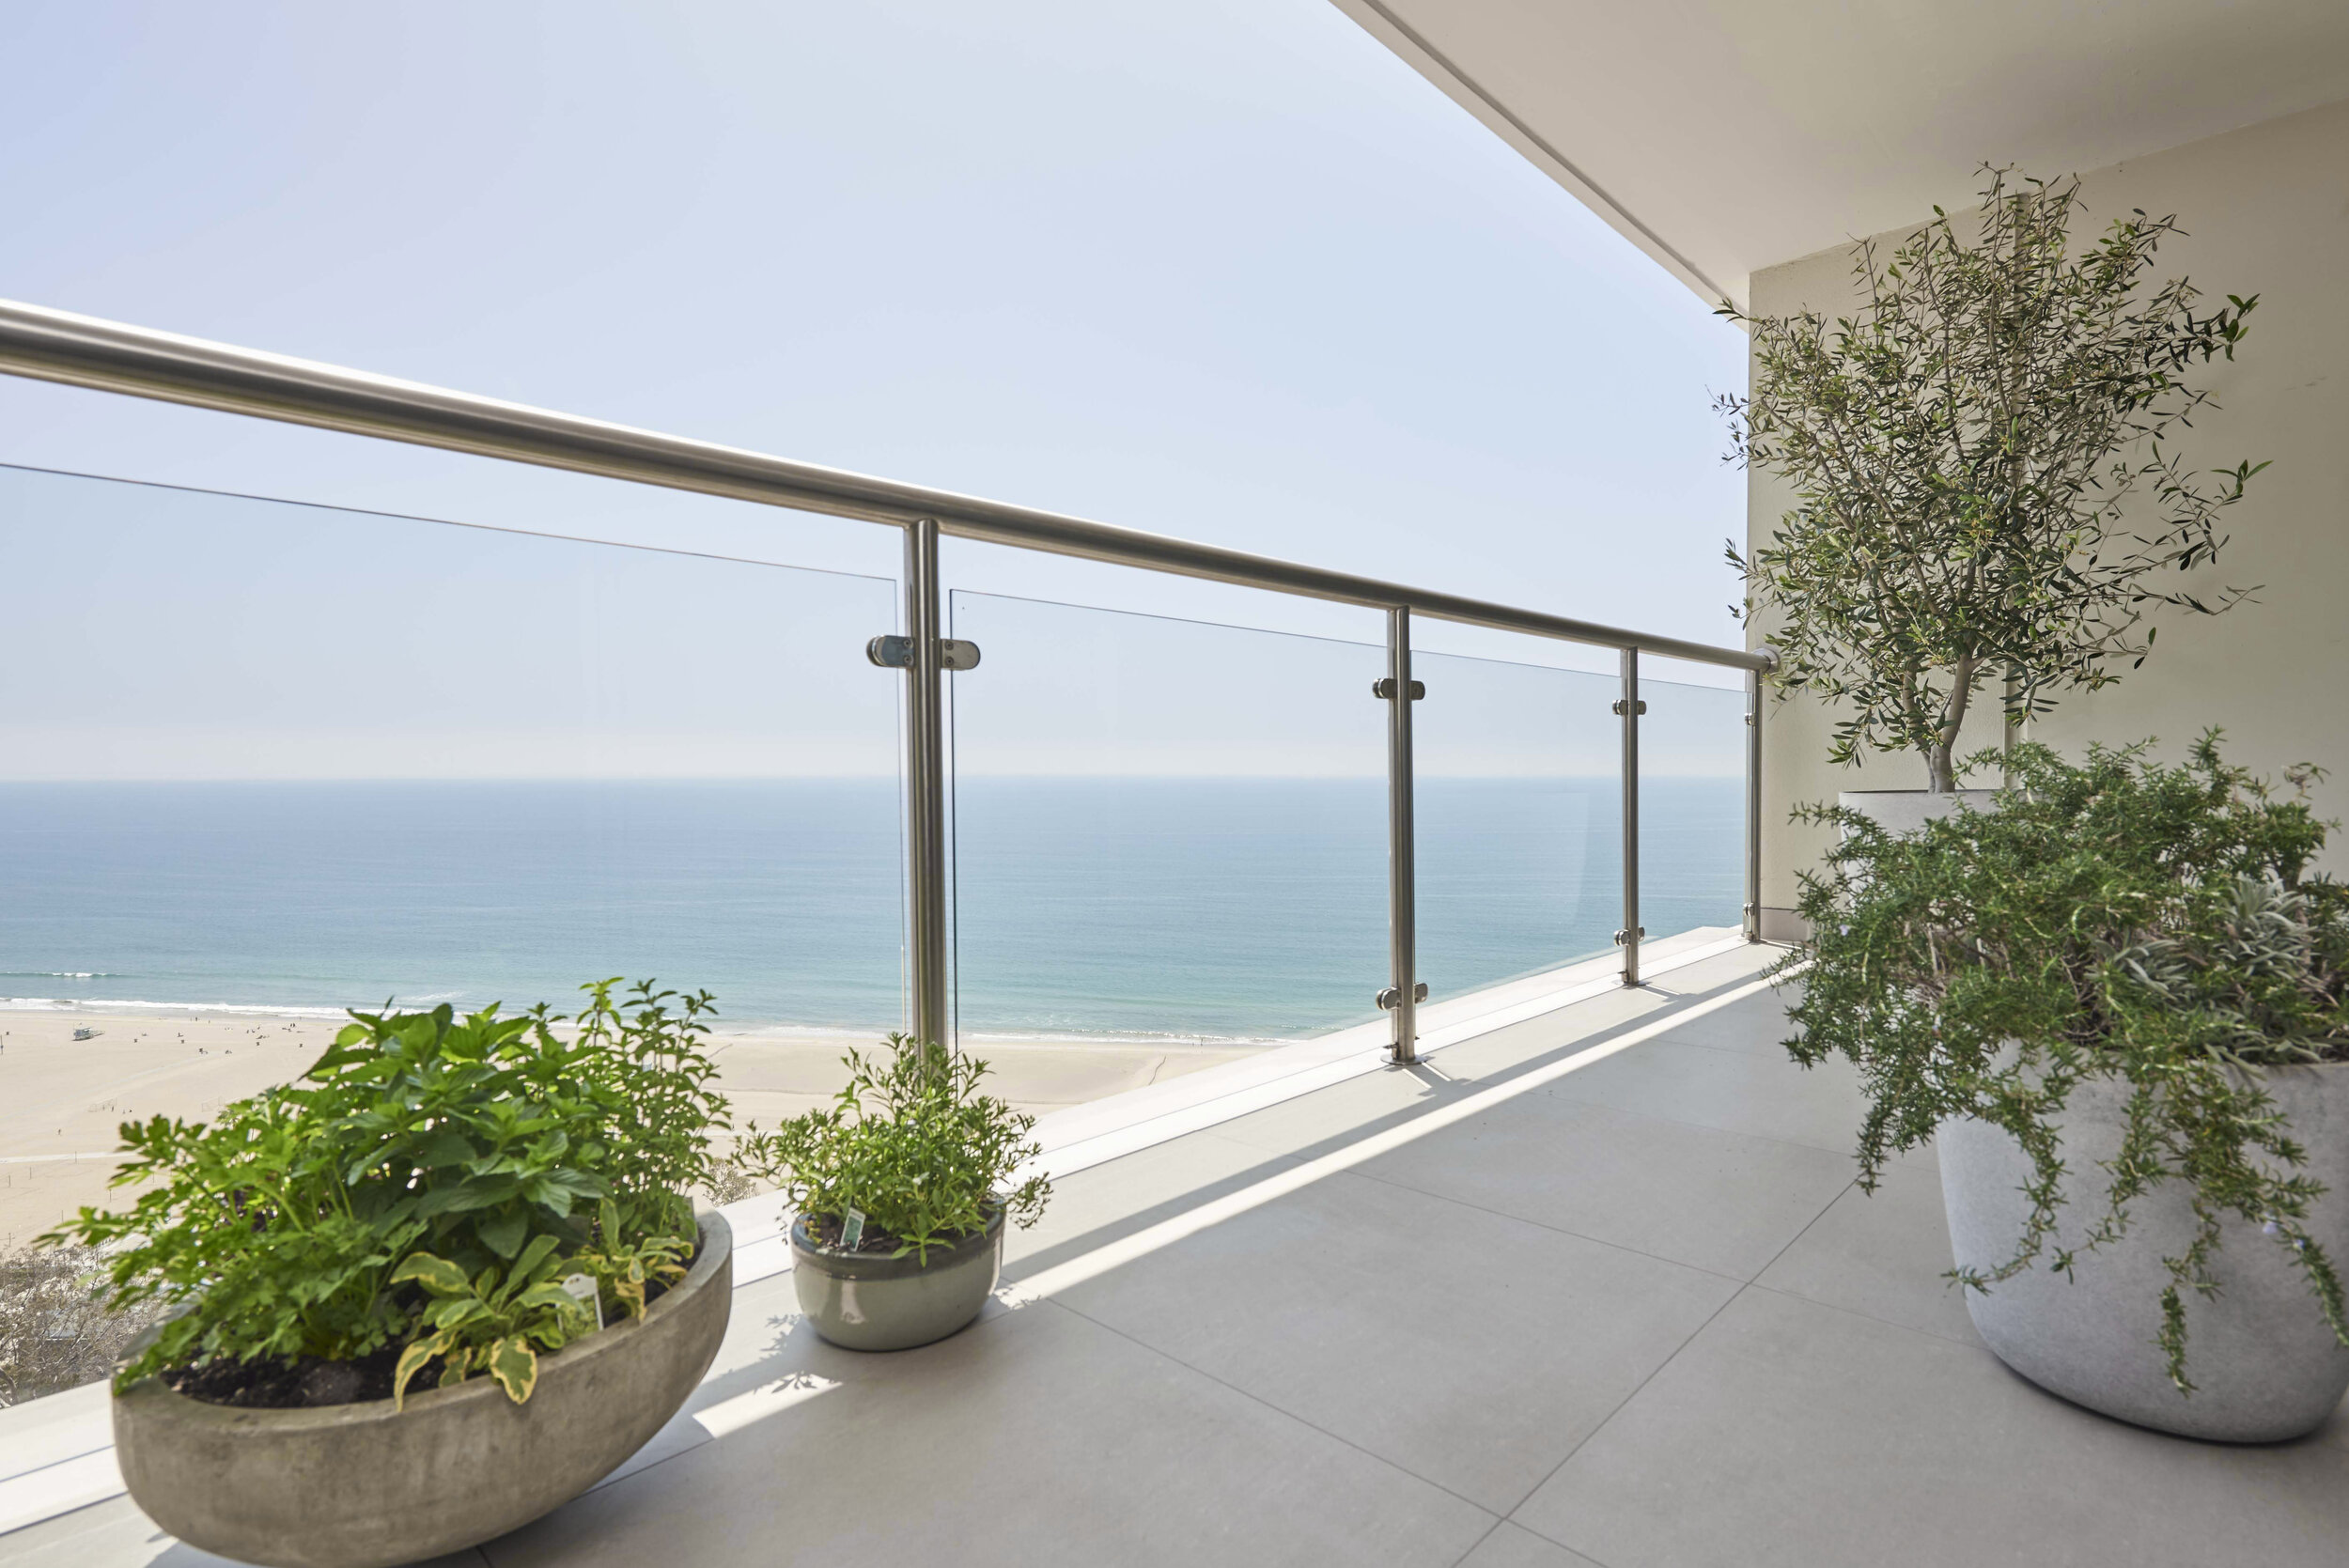 patio with plants in concrete planters overlooking ocean